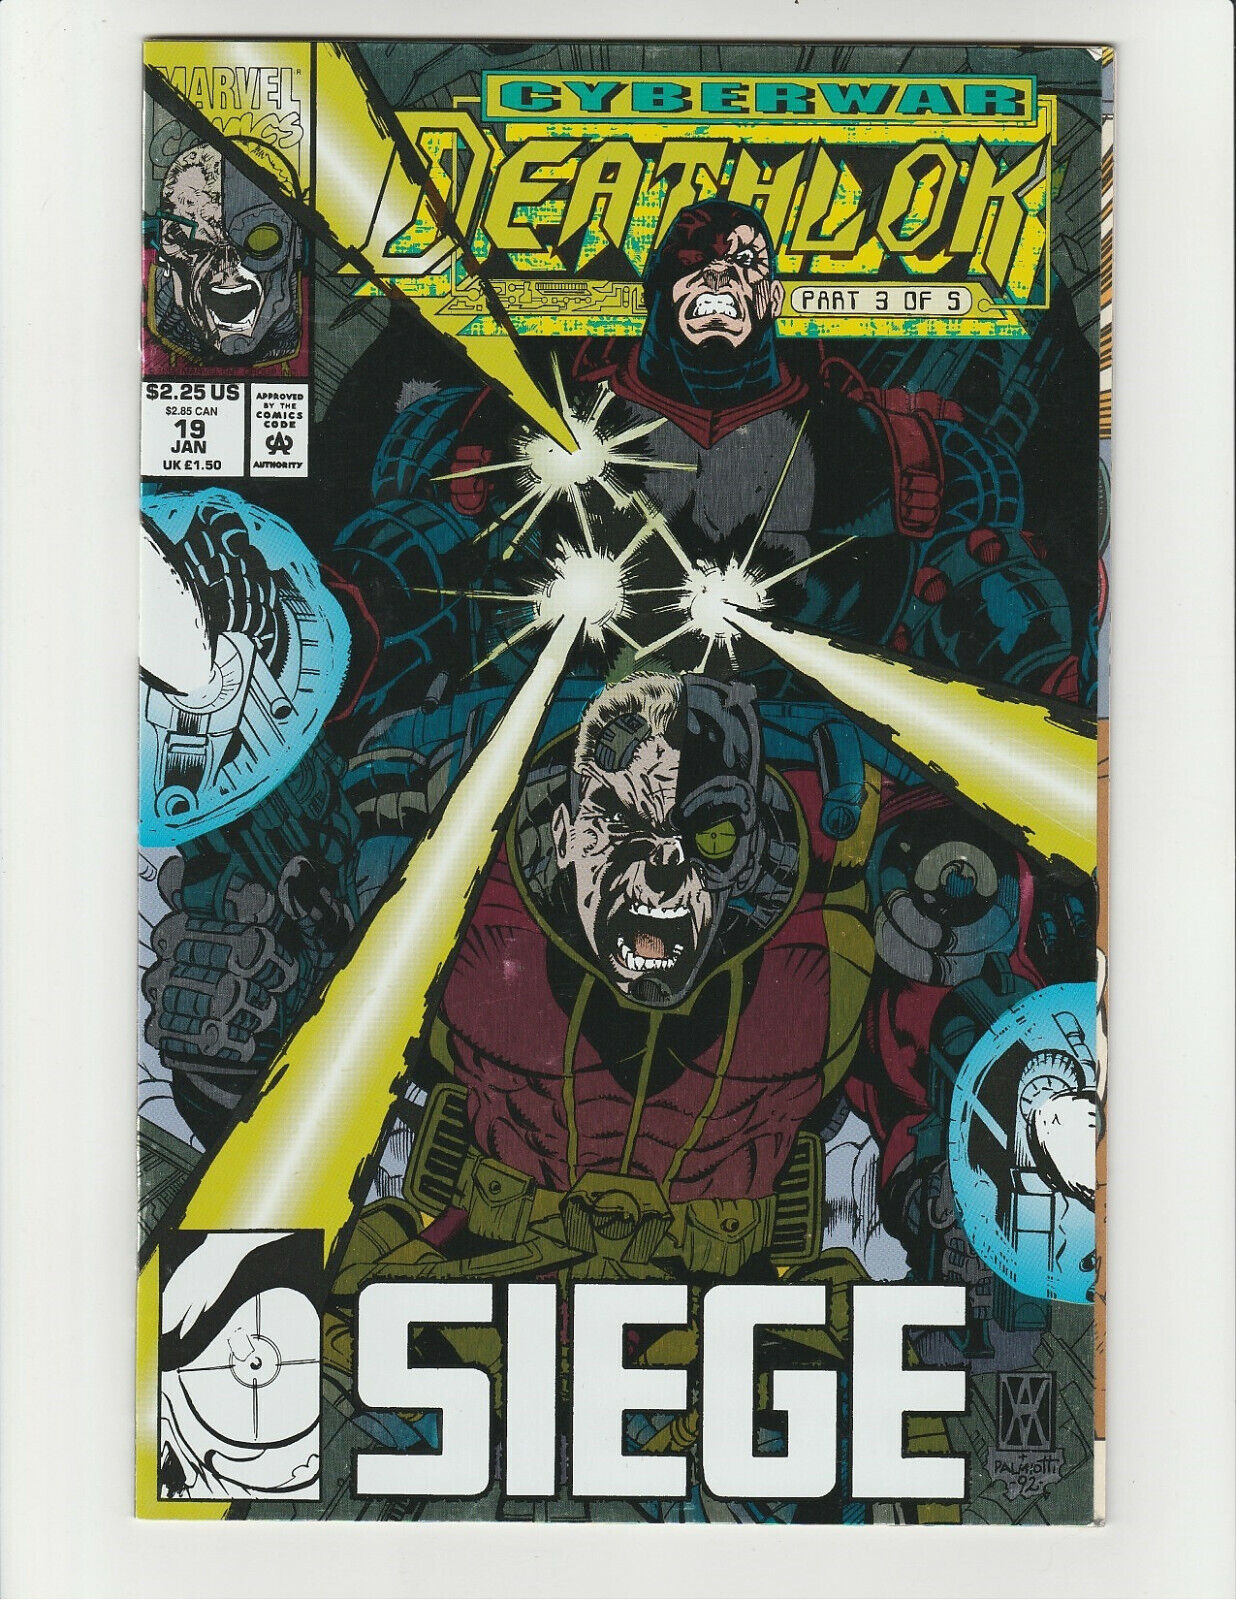 DEATHLOK #19 1993 Marvel Comics Siege CyberWar Pt. 3 of 5 (8.5) Very Fine+